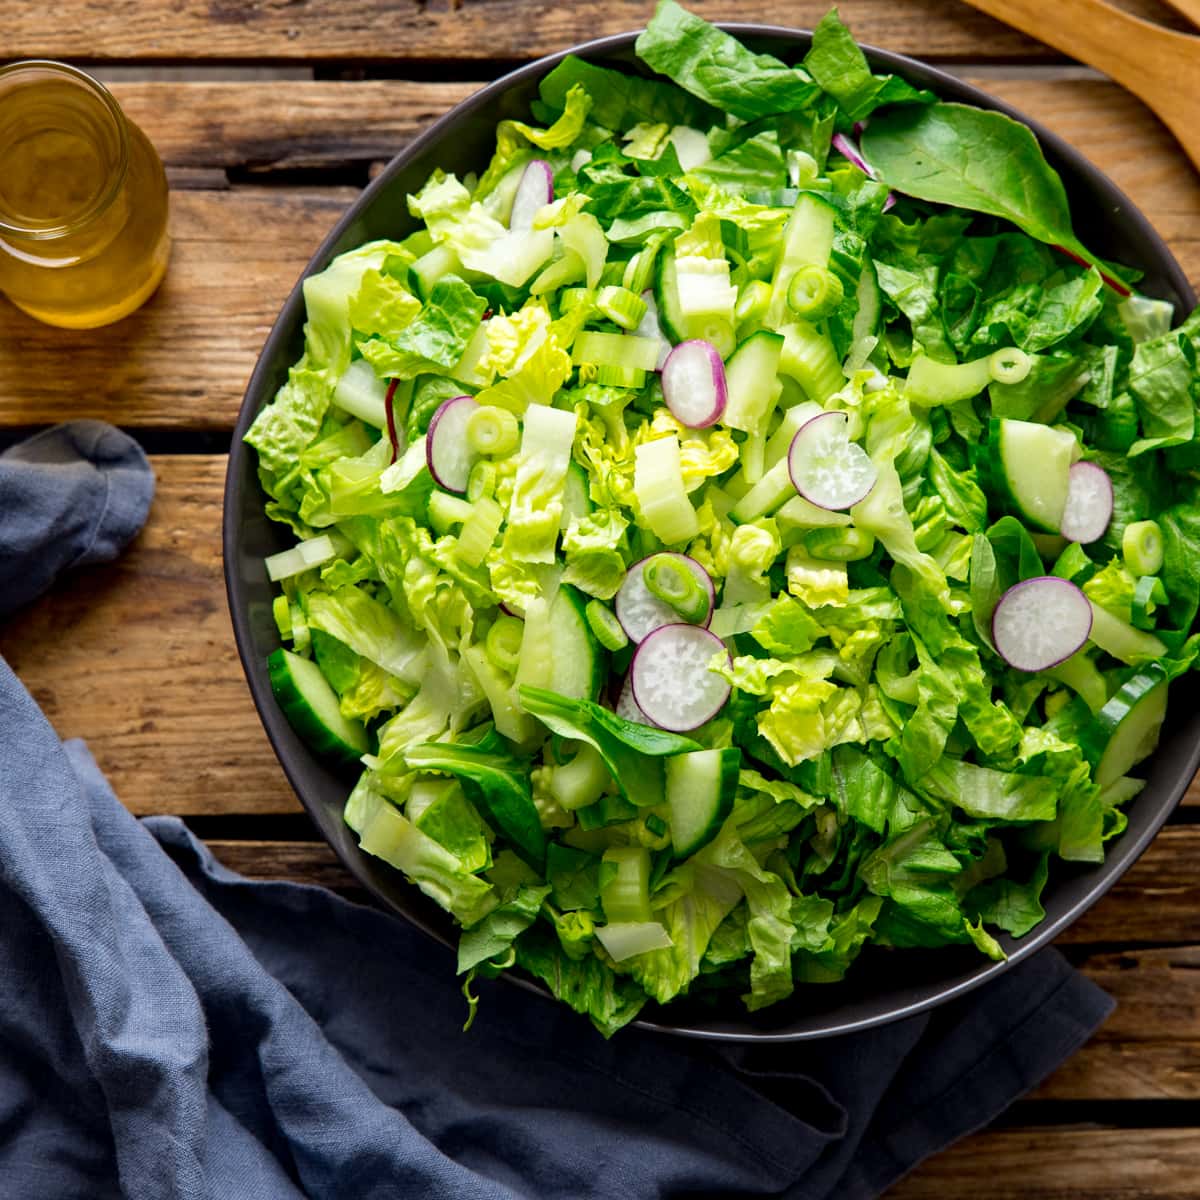 https://www.kitchensanctuary.com/wp-content/uploads/2021/06/Simple-Green-Salad-with-Vinaigrette-Square-FS-3241.jpg